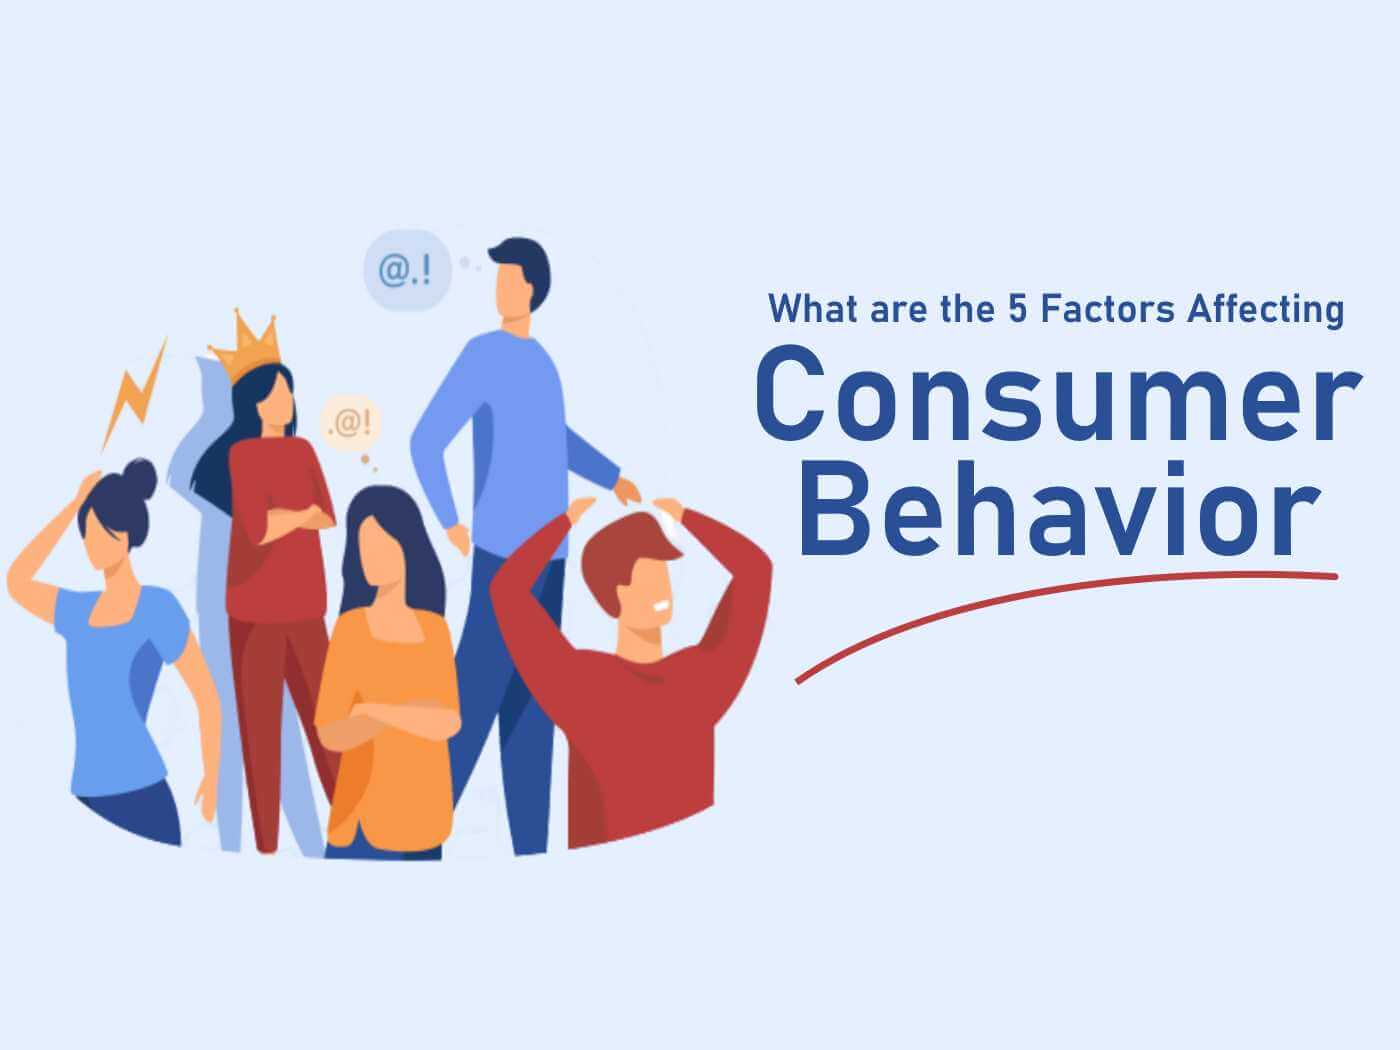 importance of consumer behaviour in marketing essay